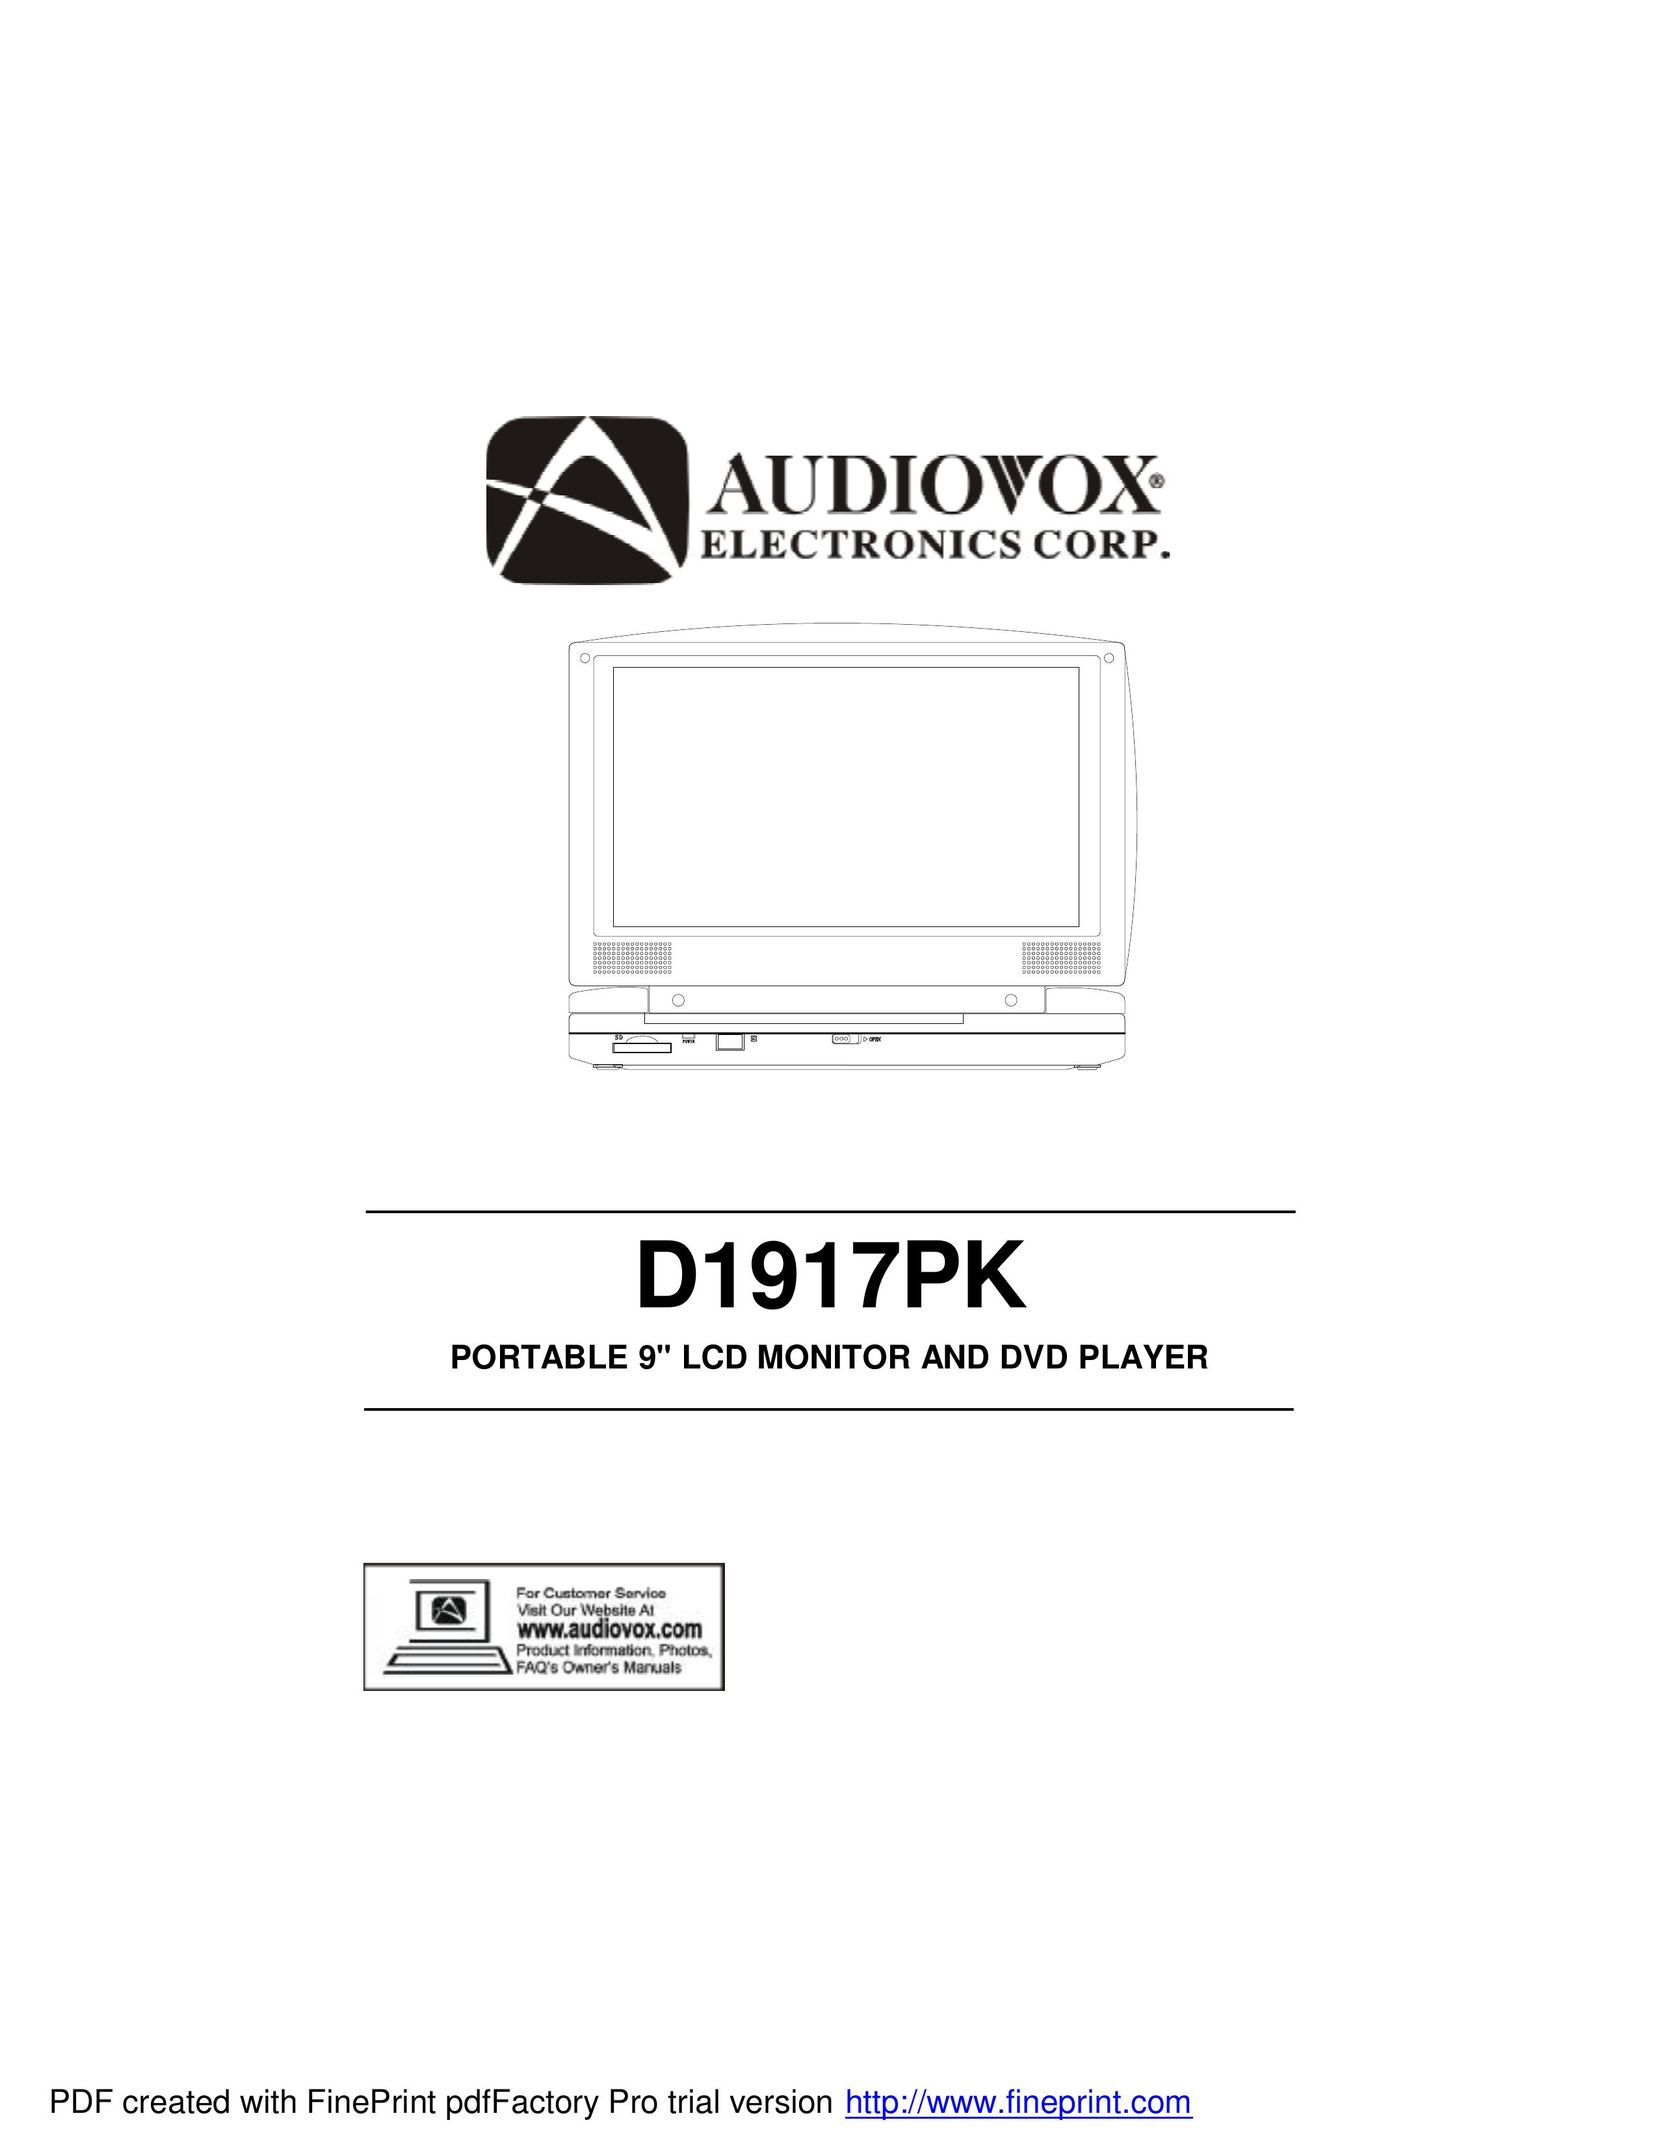 Audiovox D1917PK DVD Player User Manual